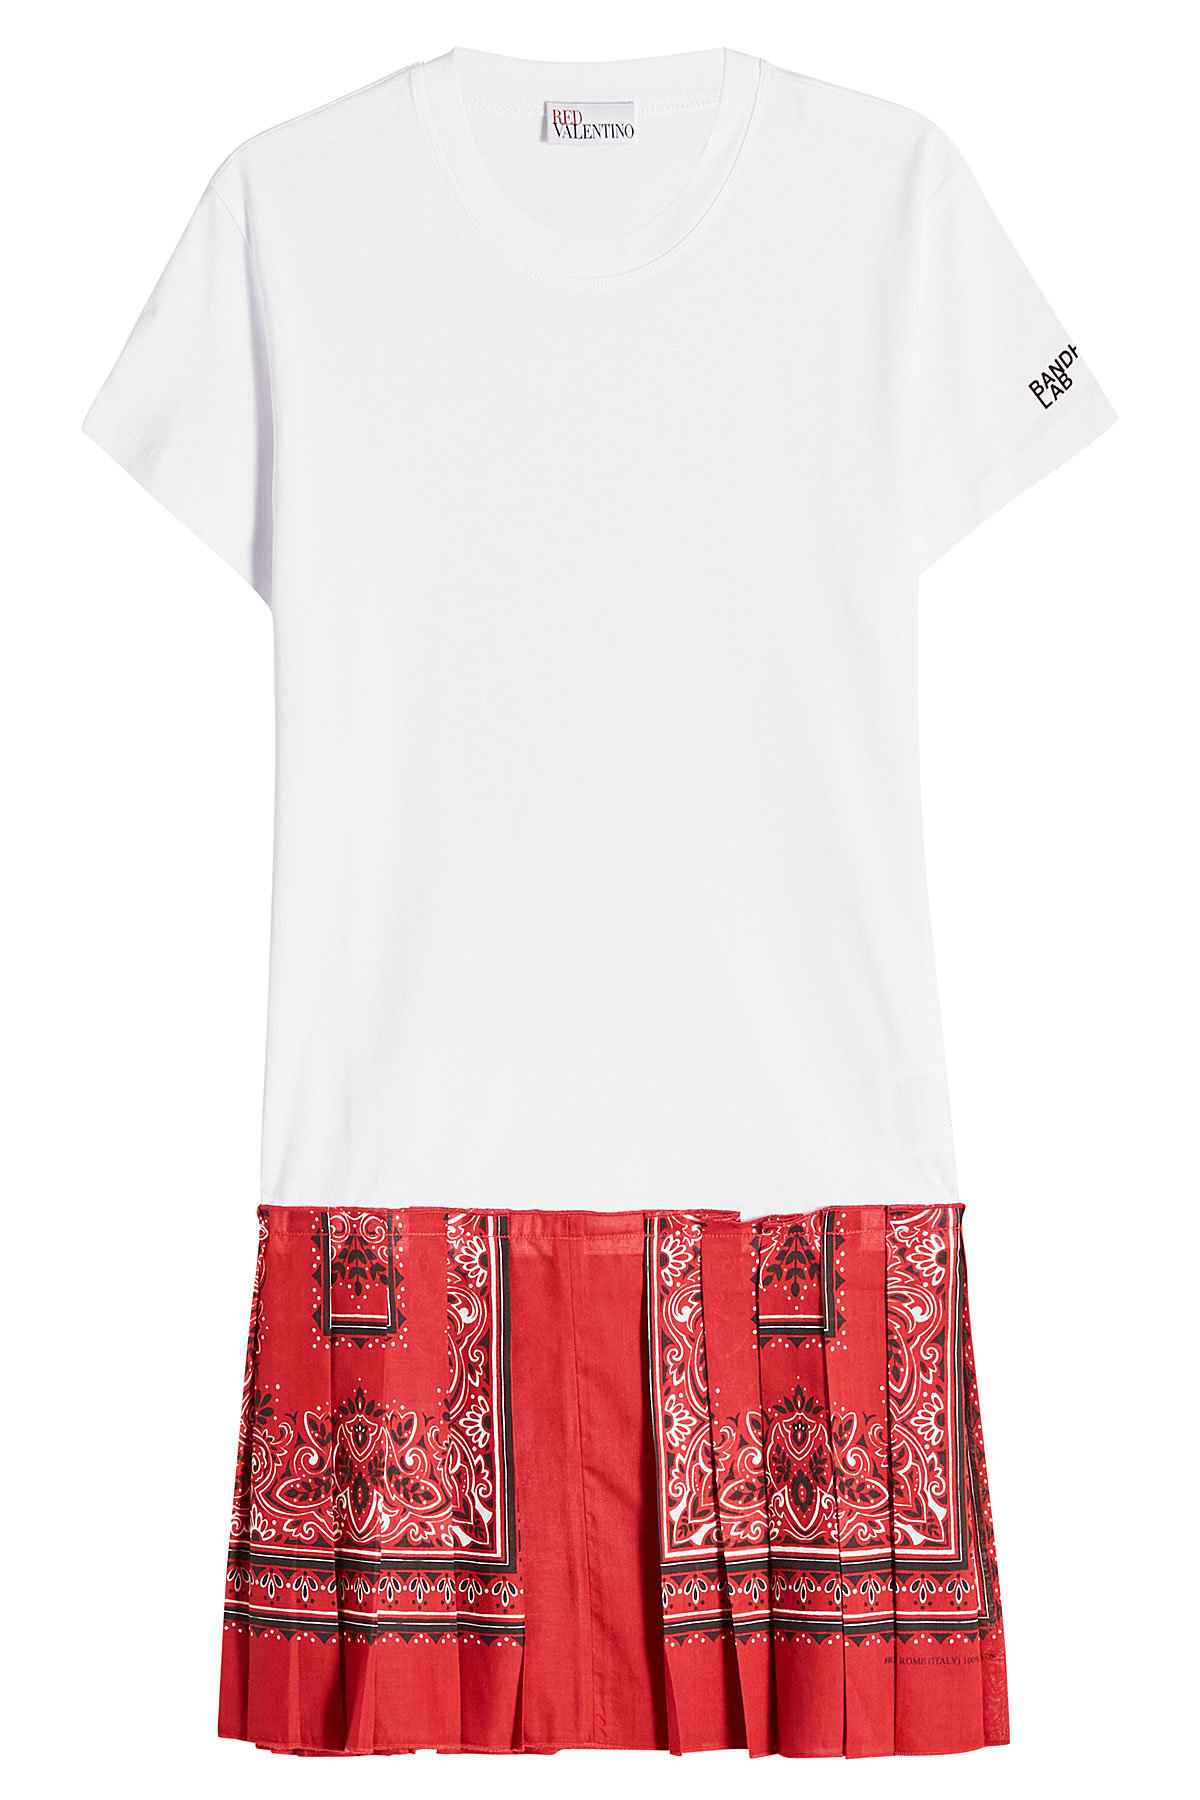 Red Valentino - Bandana T-Shirt Dress